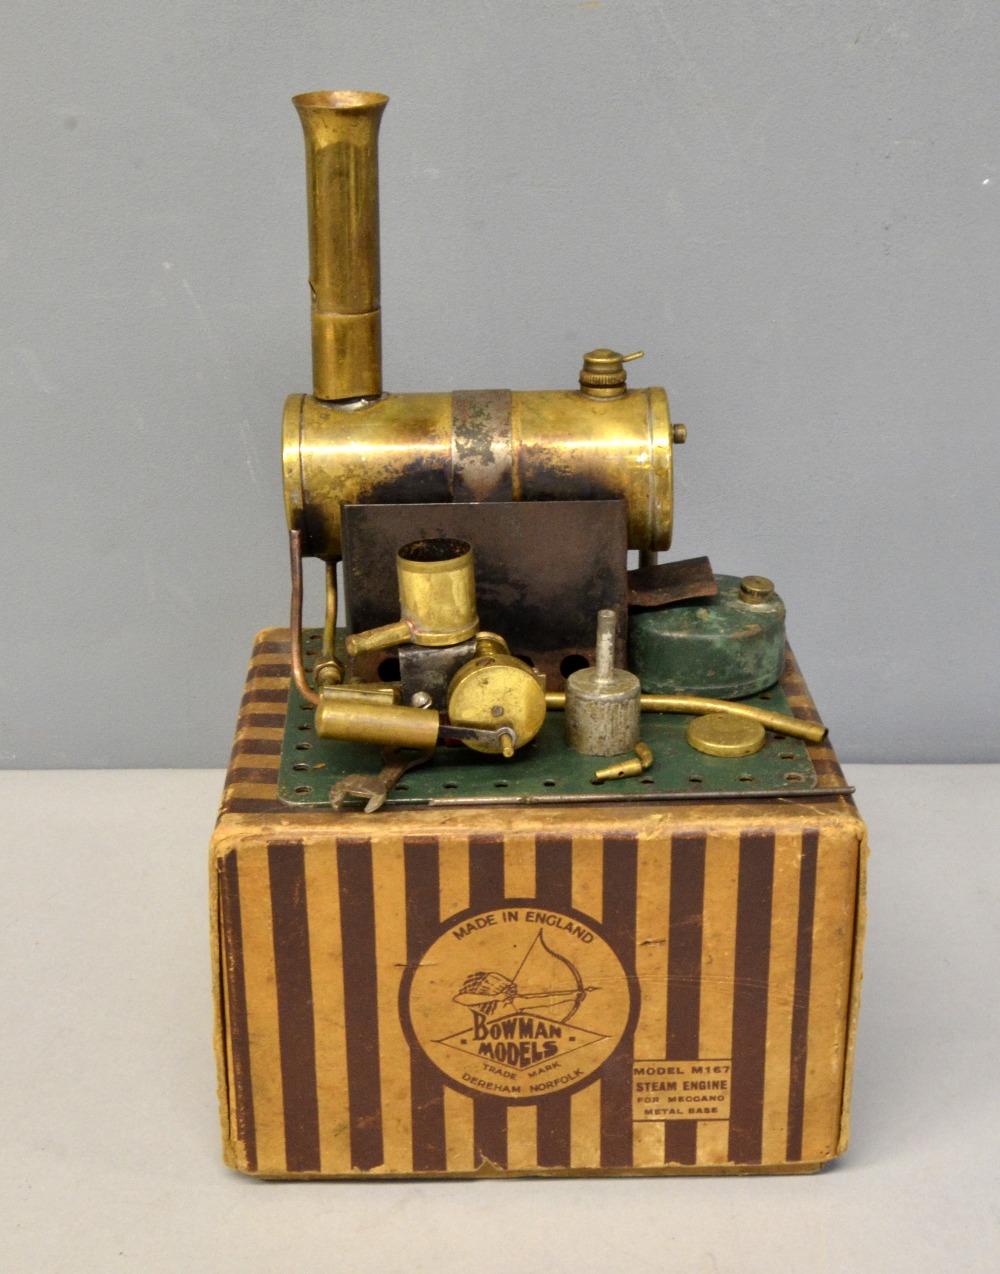 Bowman Models No M167  live steam engine, in original box